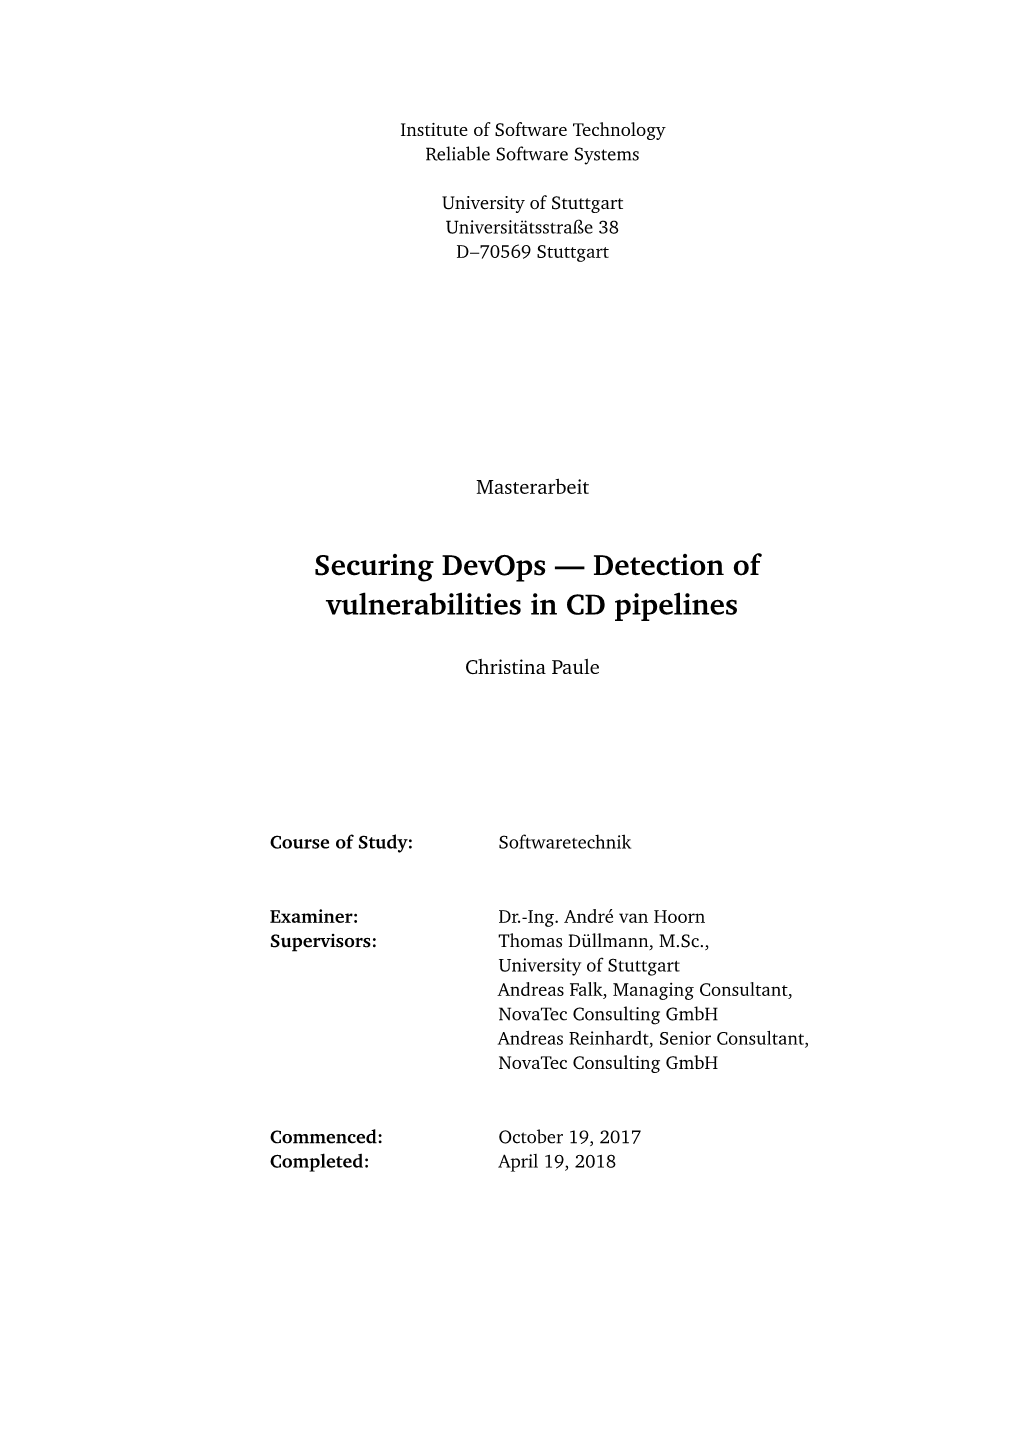 Securing Devops — Detection of Vulnerabilities in CD Pipelines